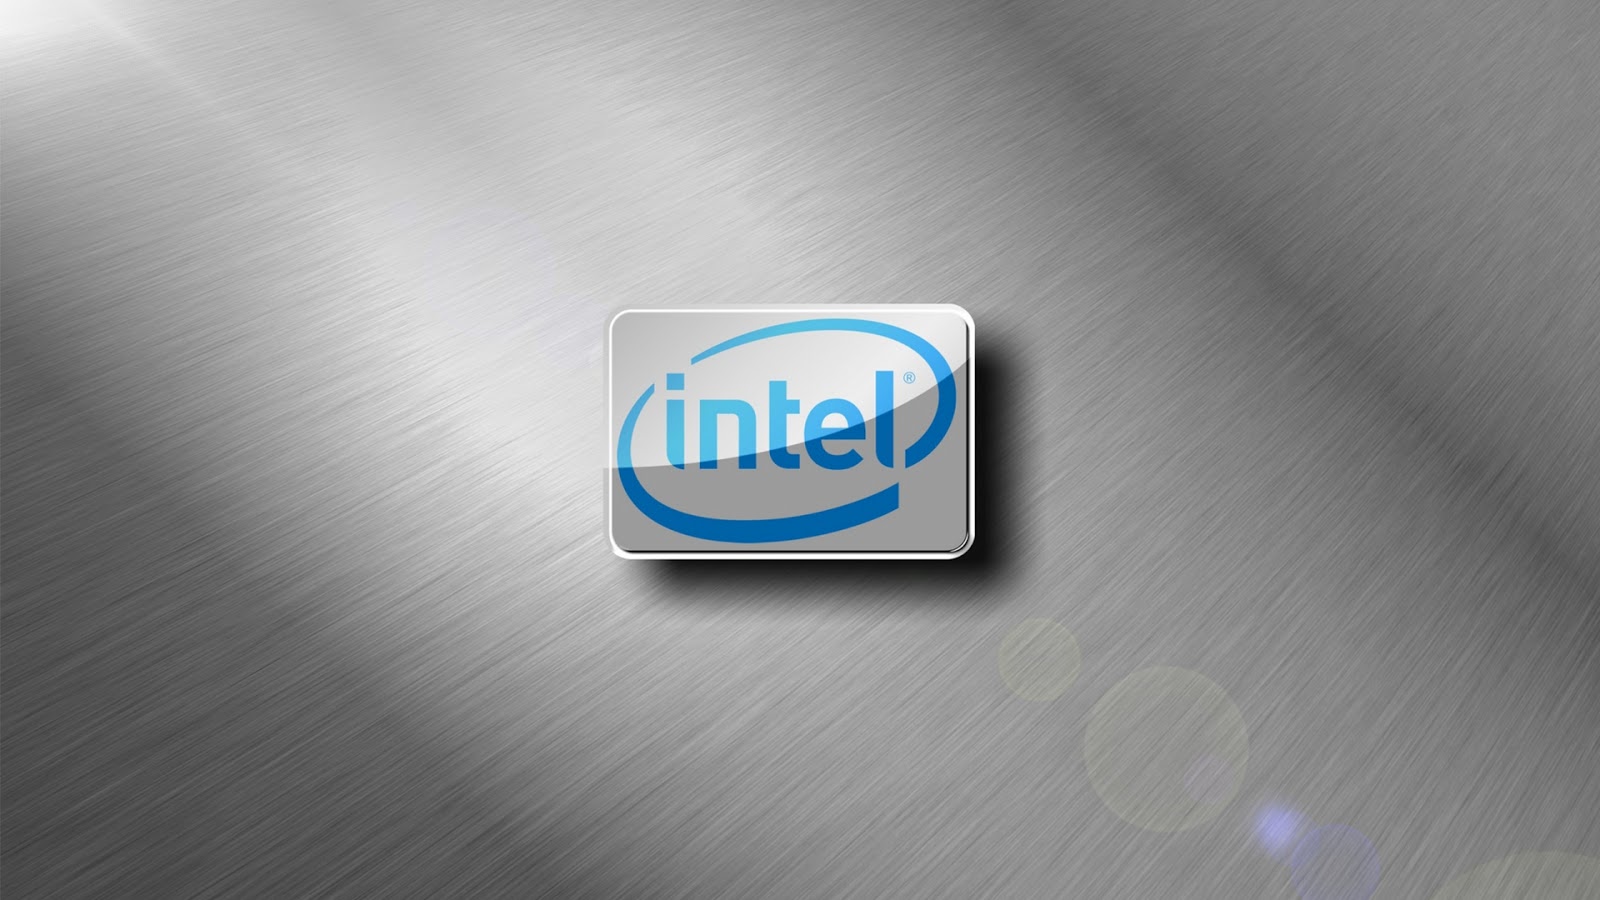 Intel Wallpaper Hd Related Keywords Suggestions   Intel Wallpaper Hd